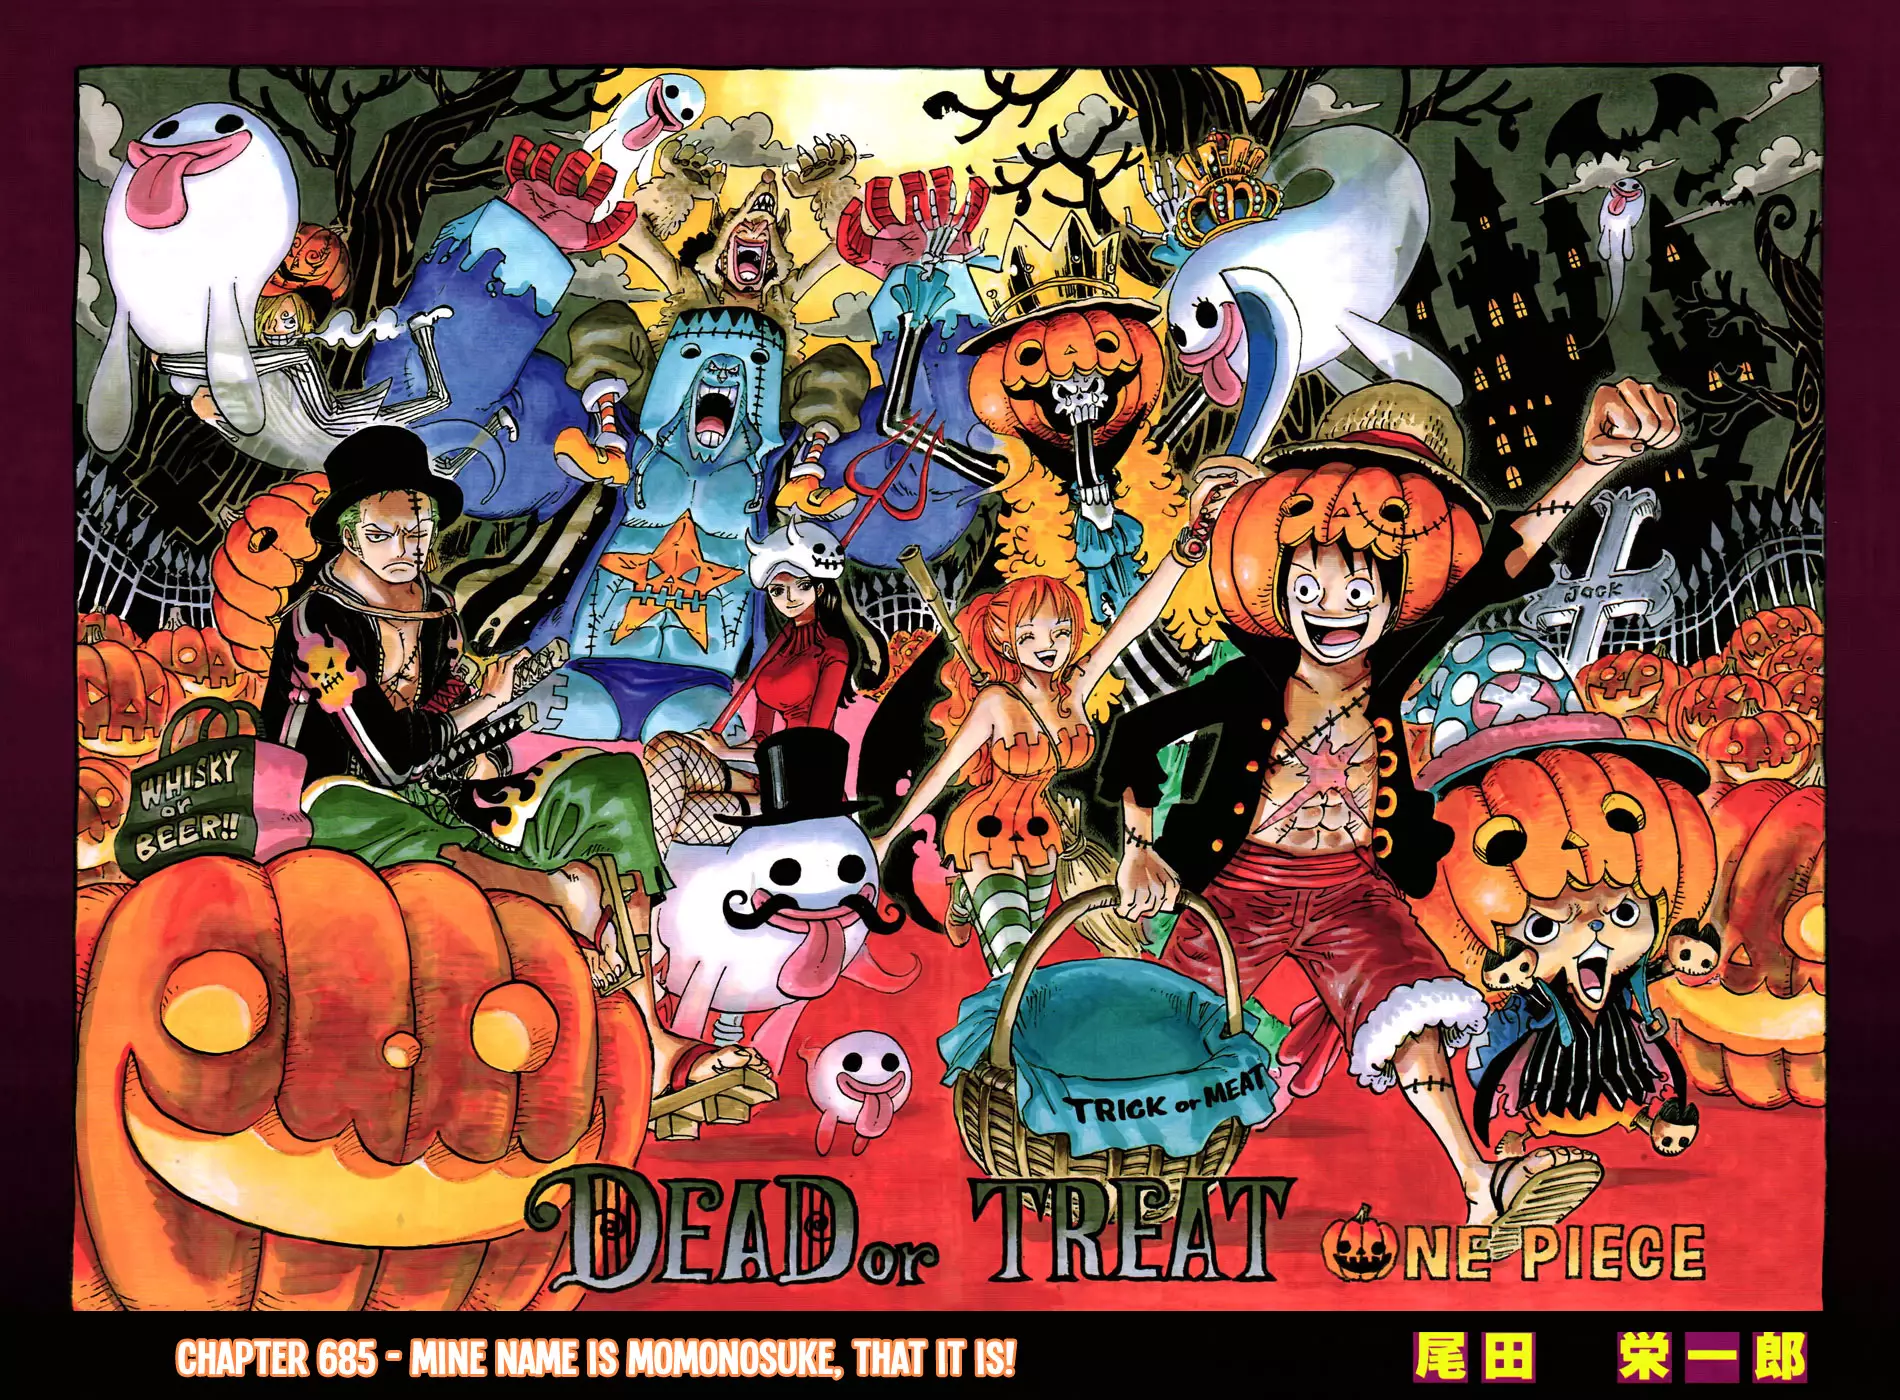 One Piece - Digital Colored Comics - 685 page 2-0ff8a96b